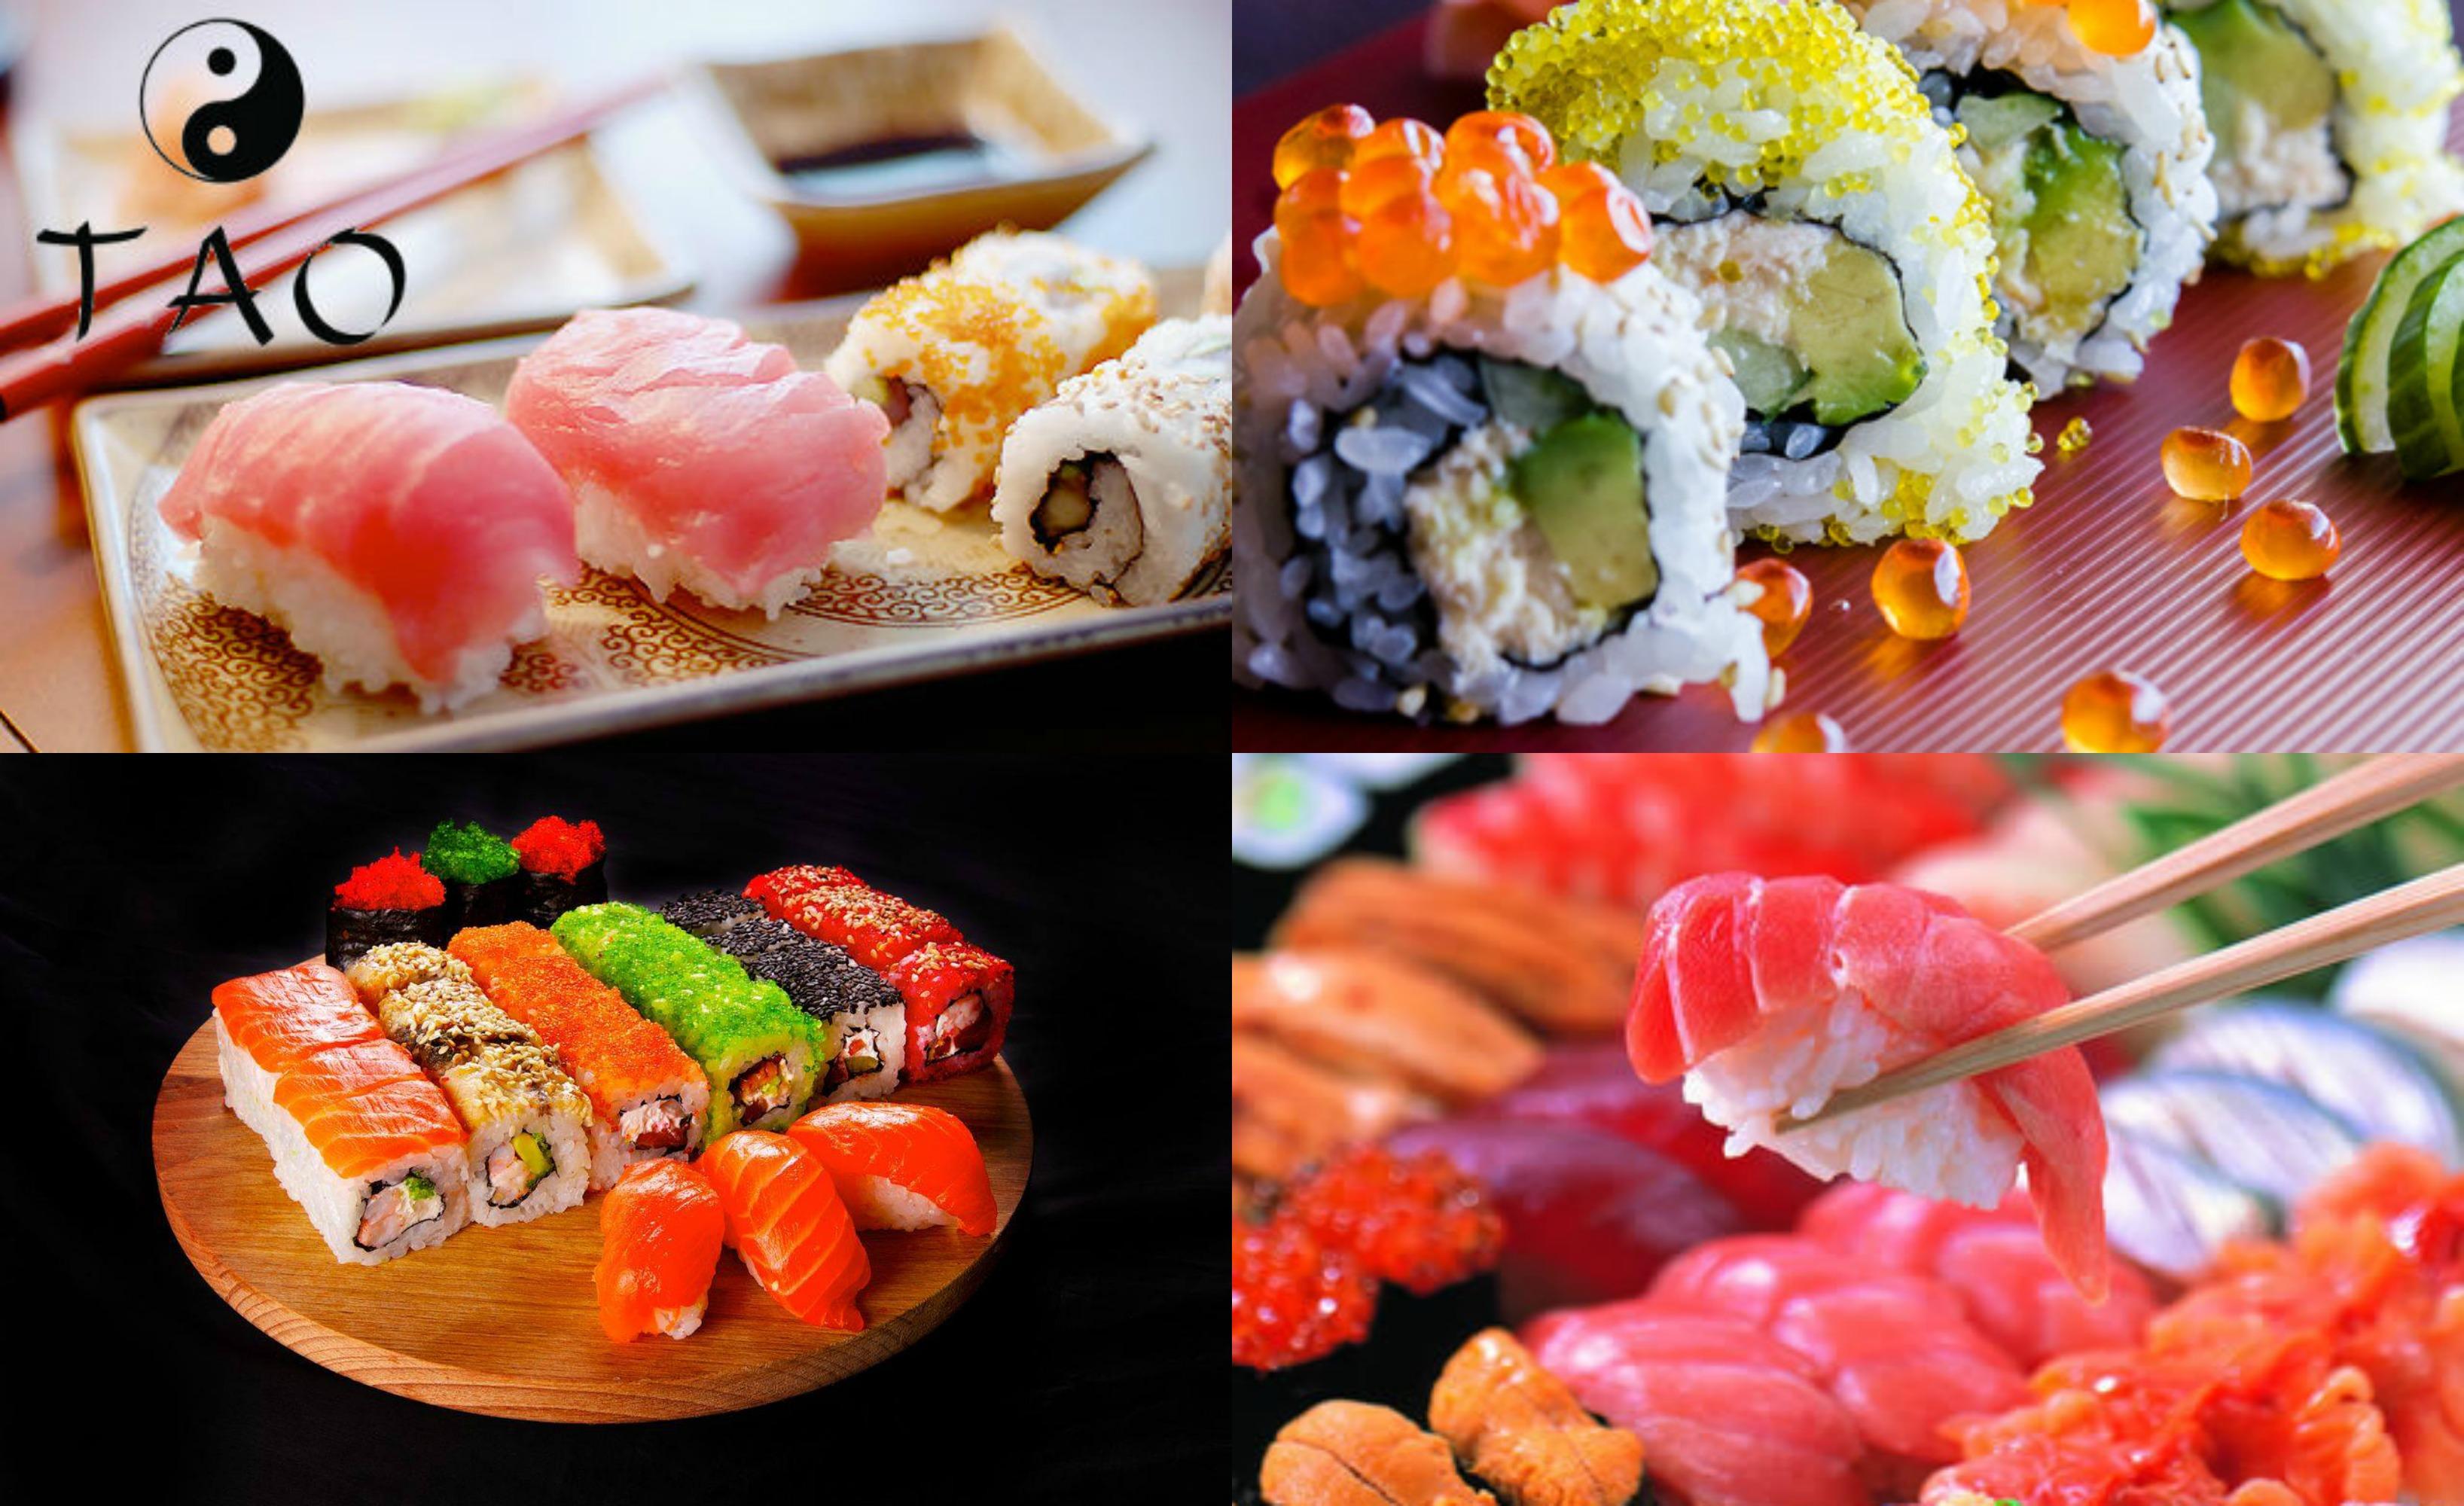 tao-chinese-and-japanese-restautant-sushi-rolly-seti-dostavka-so-skidkoy